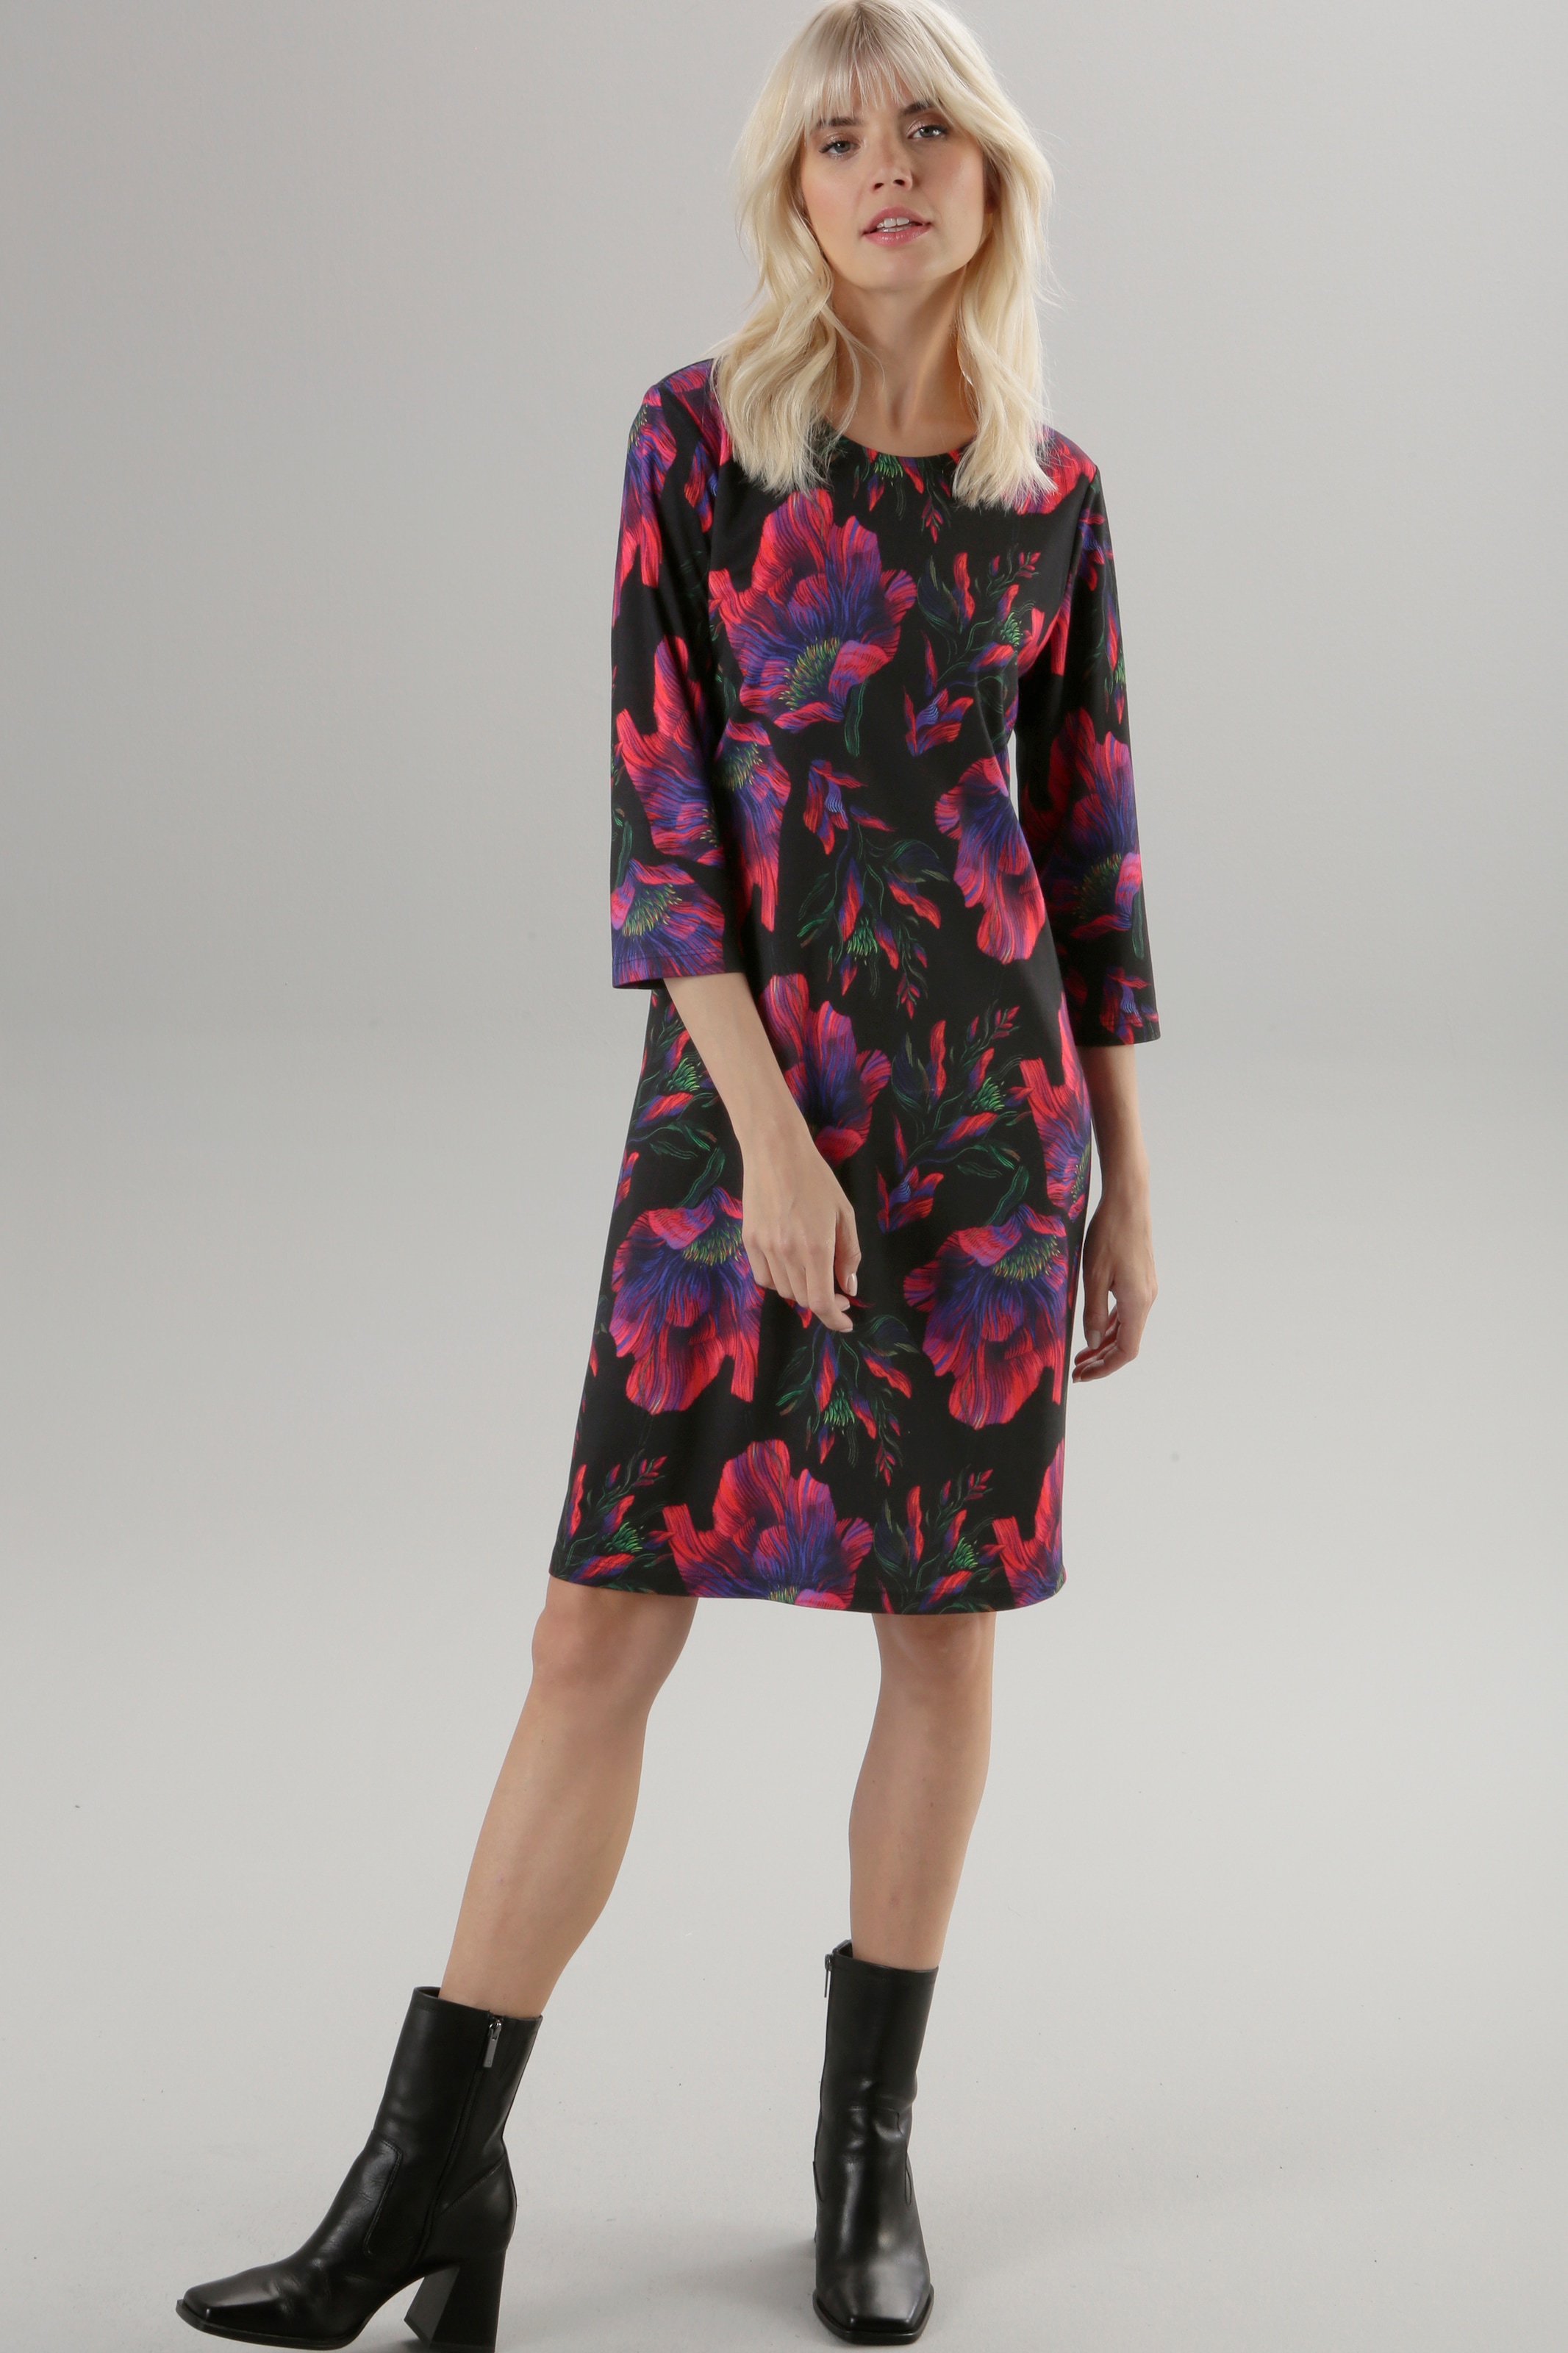 Aniston SELECTED Jerseykleid, mit Blumendruck in Knallfarben kaufen